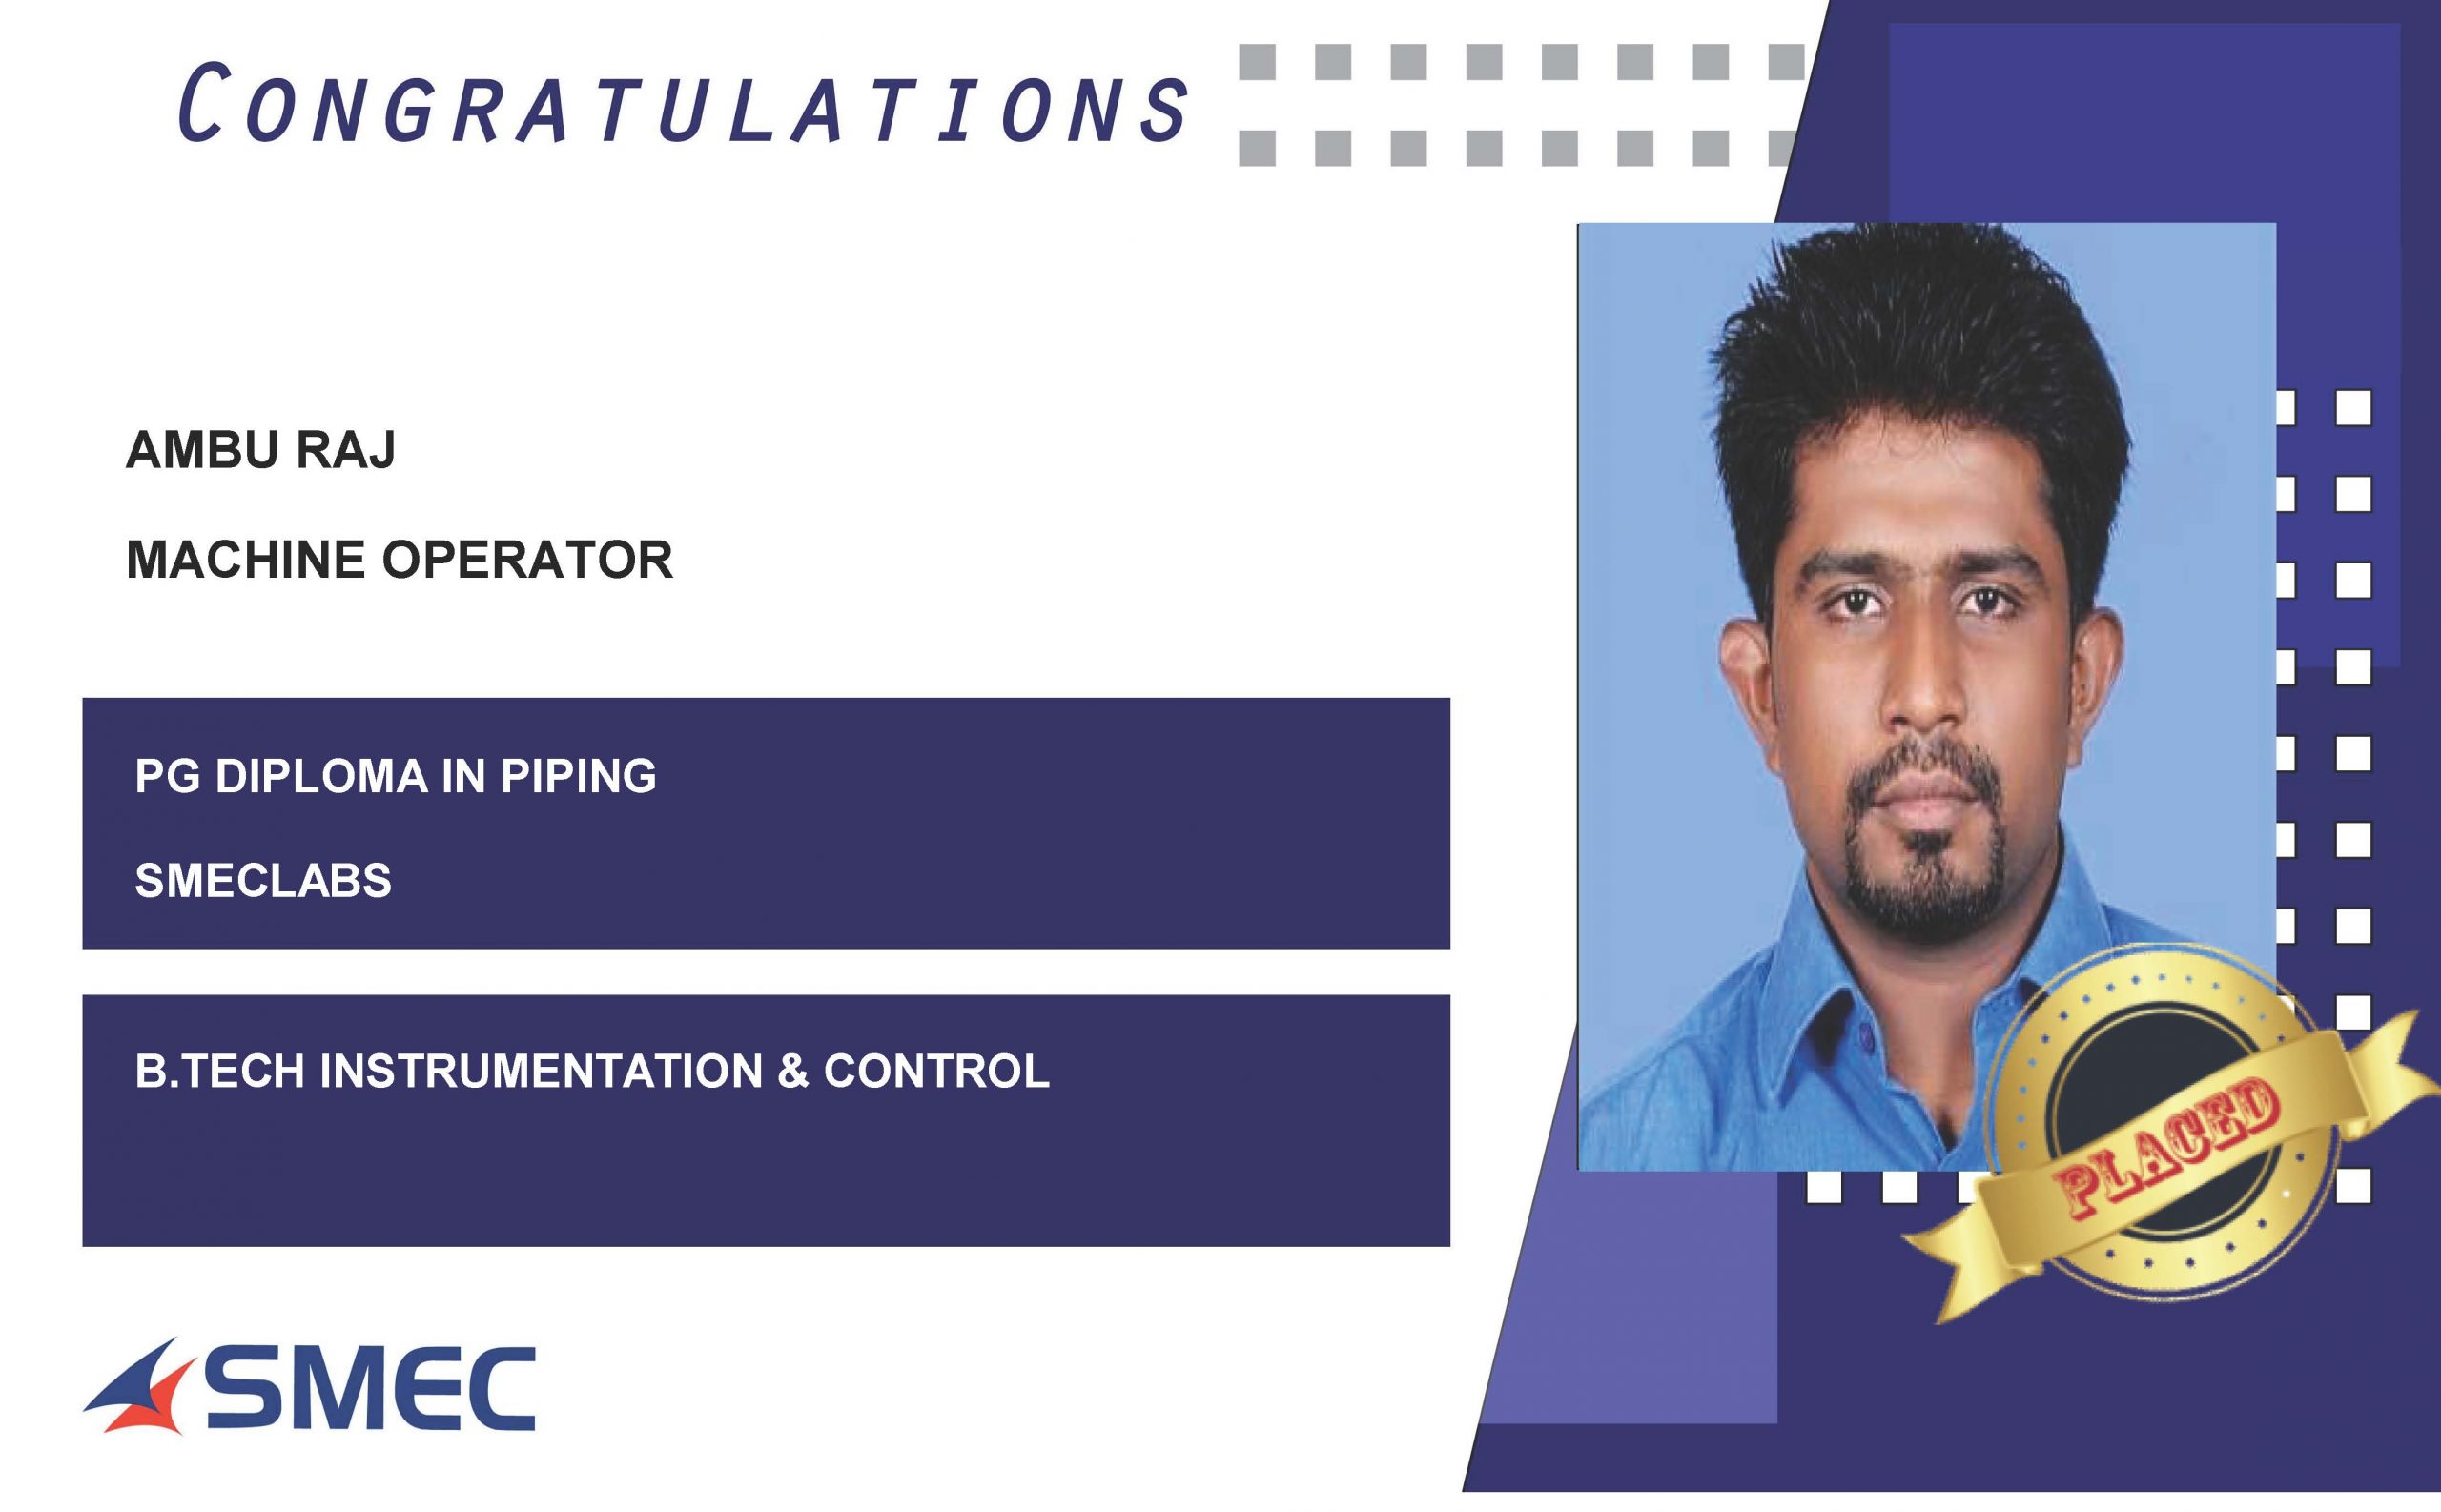 Ambu Raj Placed as Machine Operator at SMEC